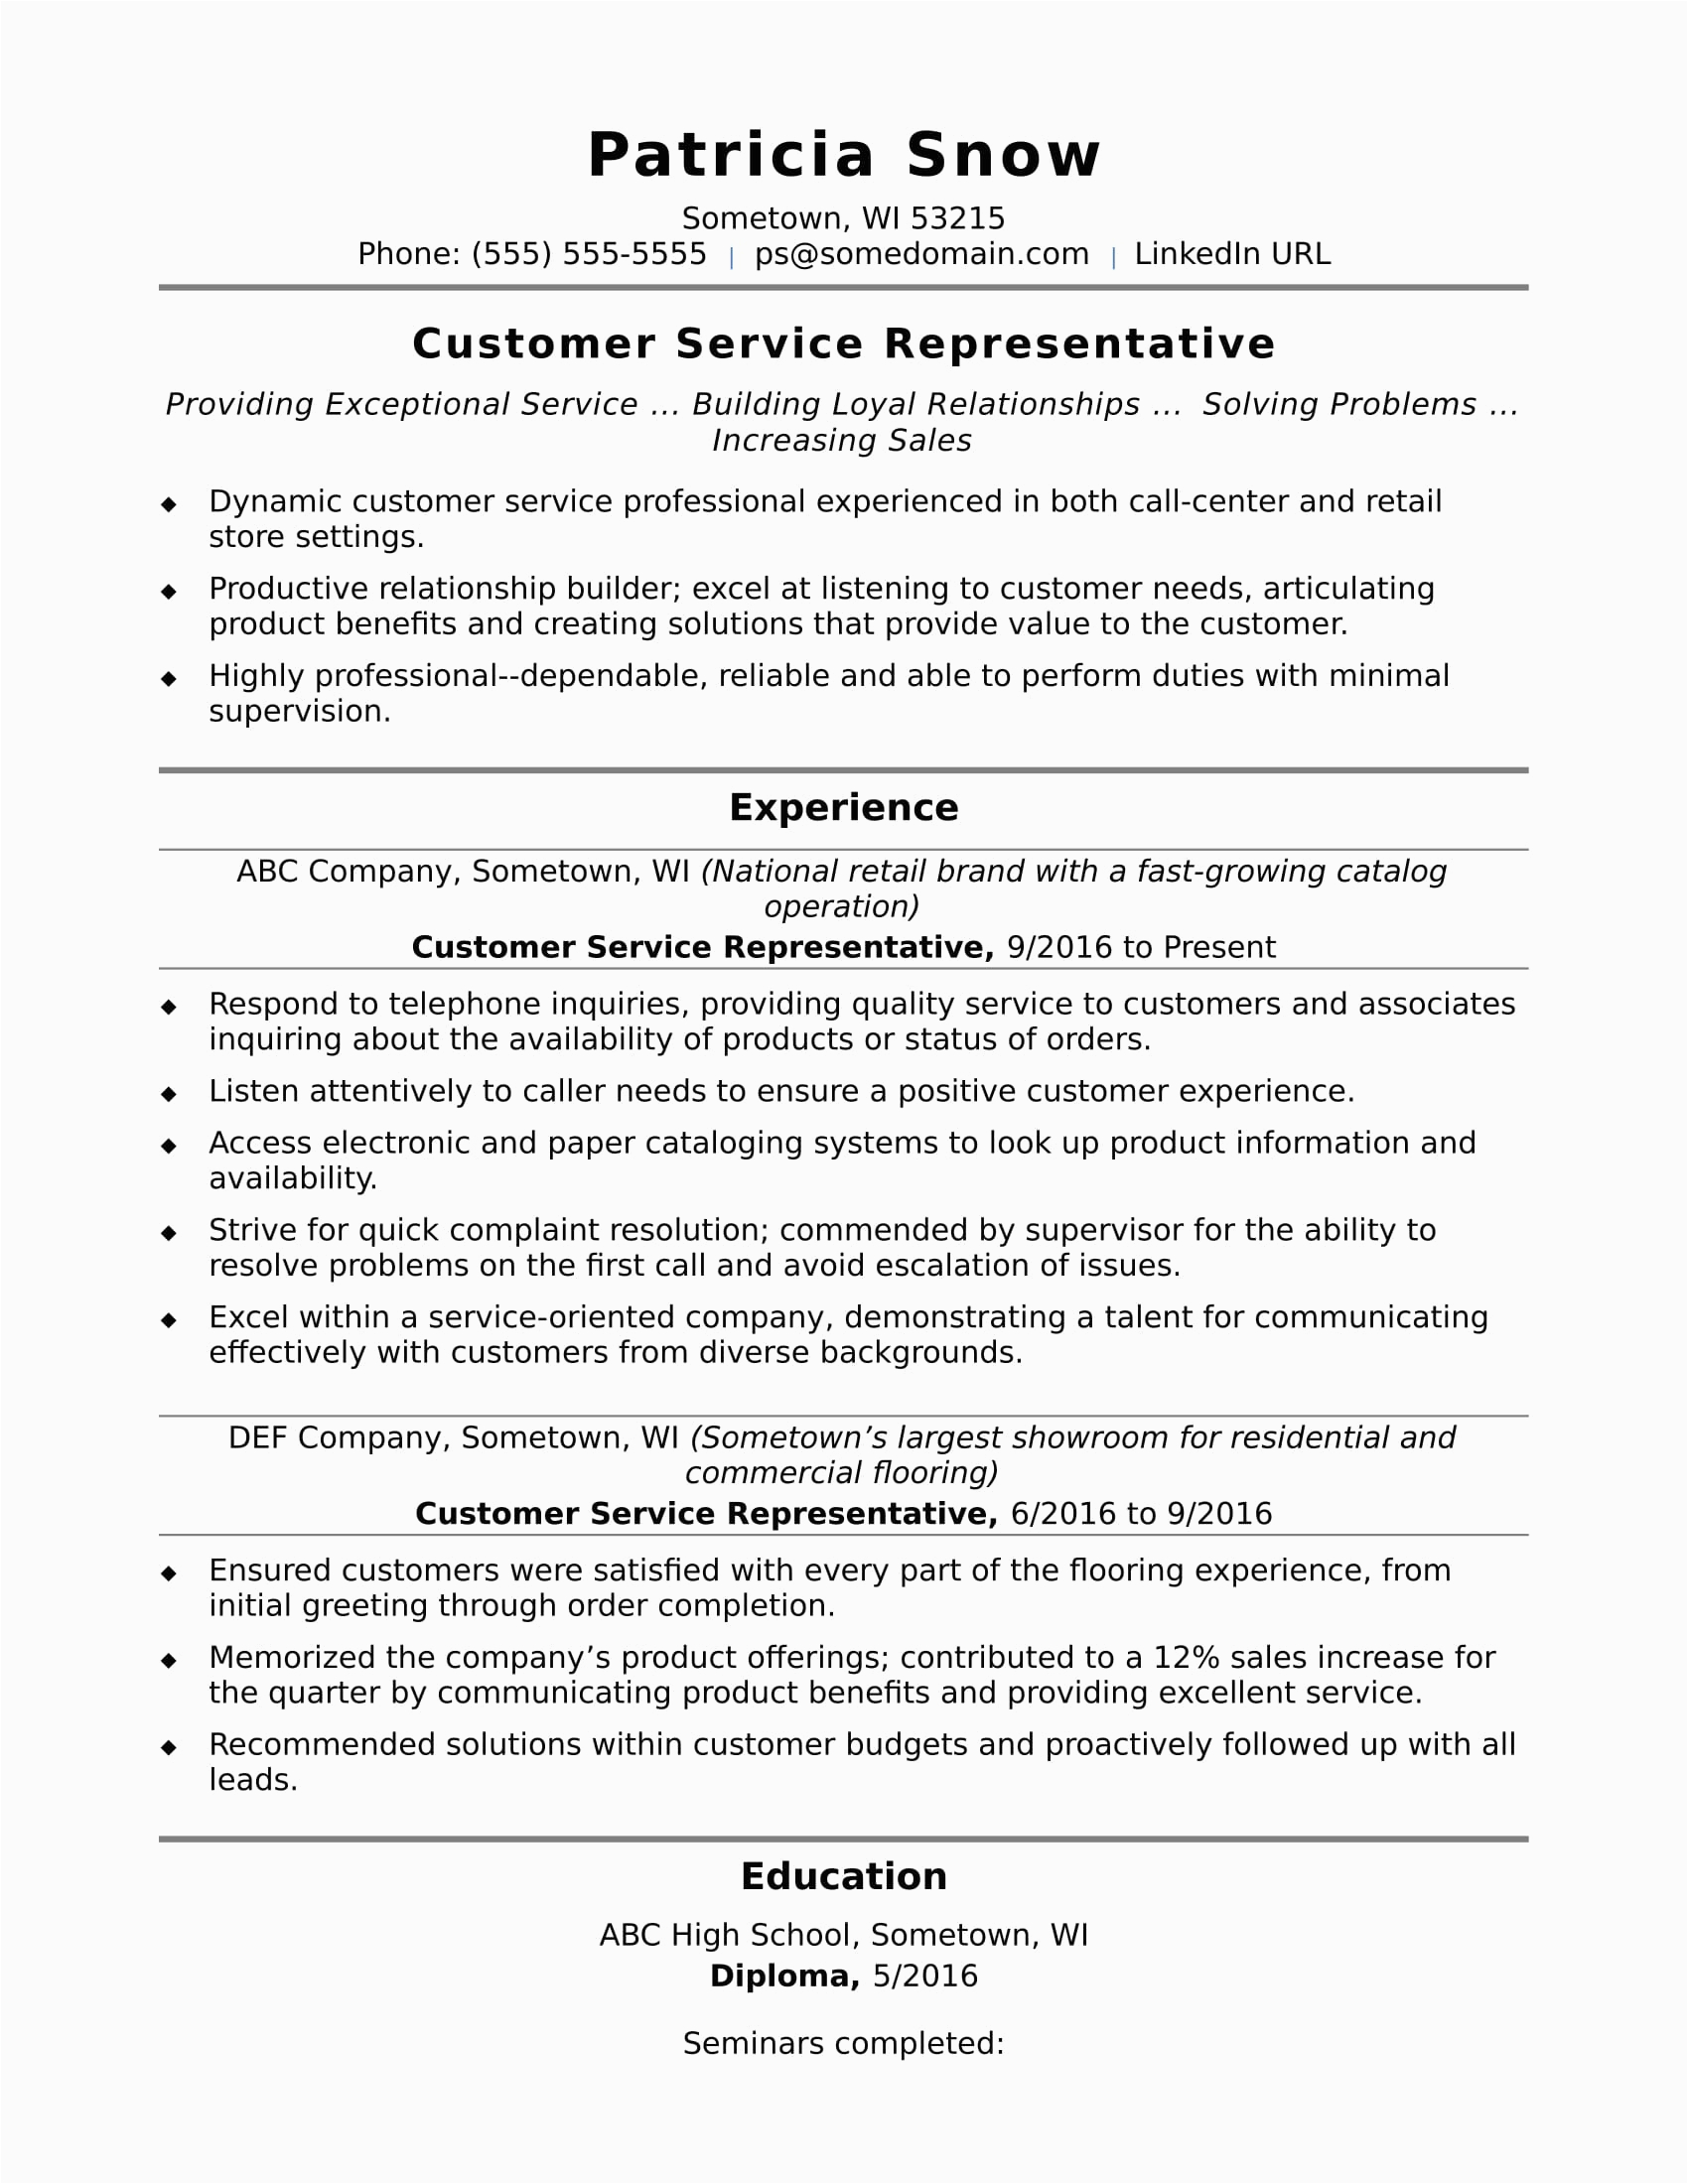 Customer Service Representative Job Description Resume Sample Customer Service Representative Resume Sample